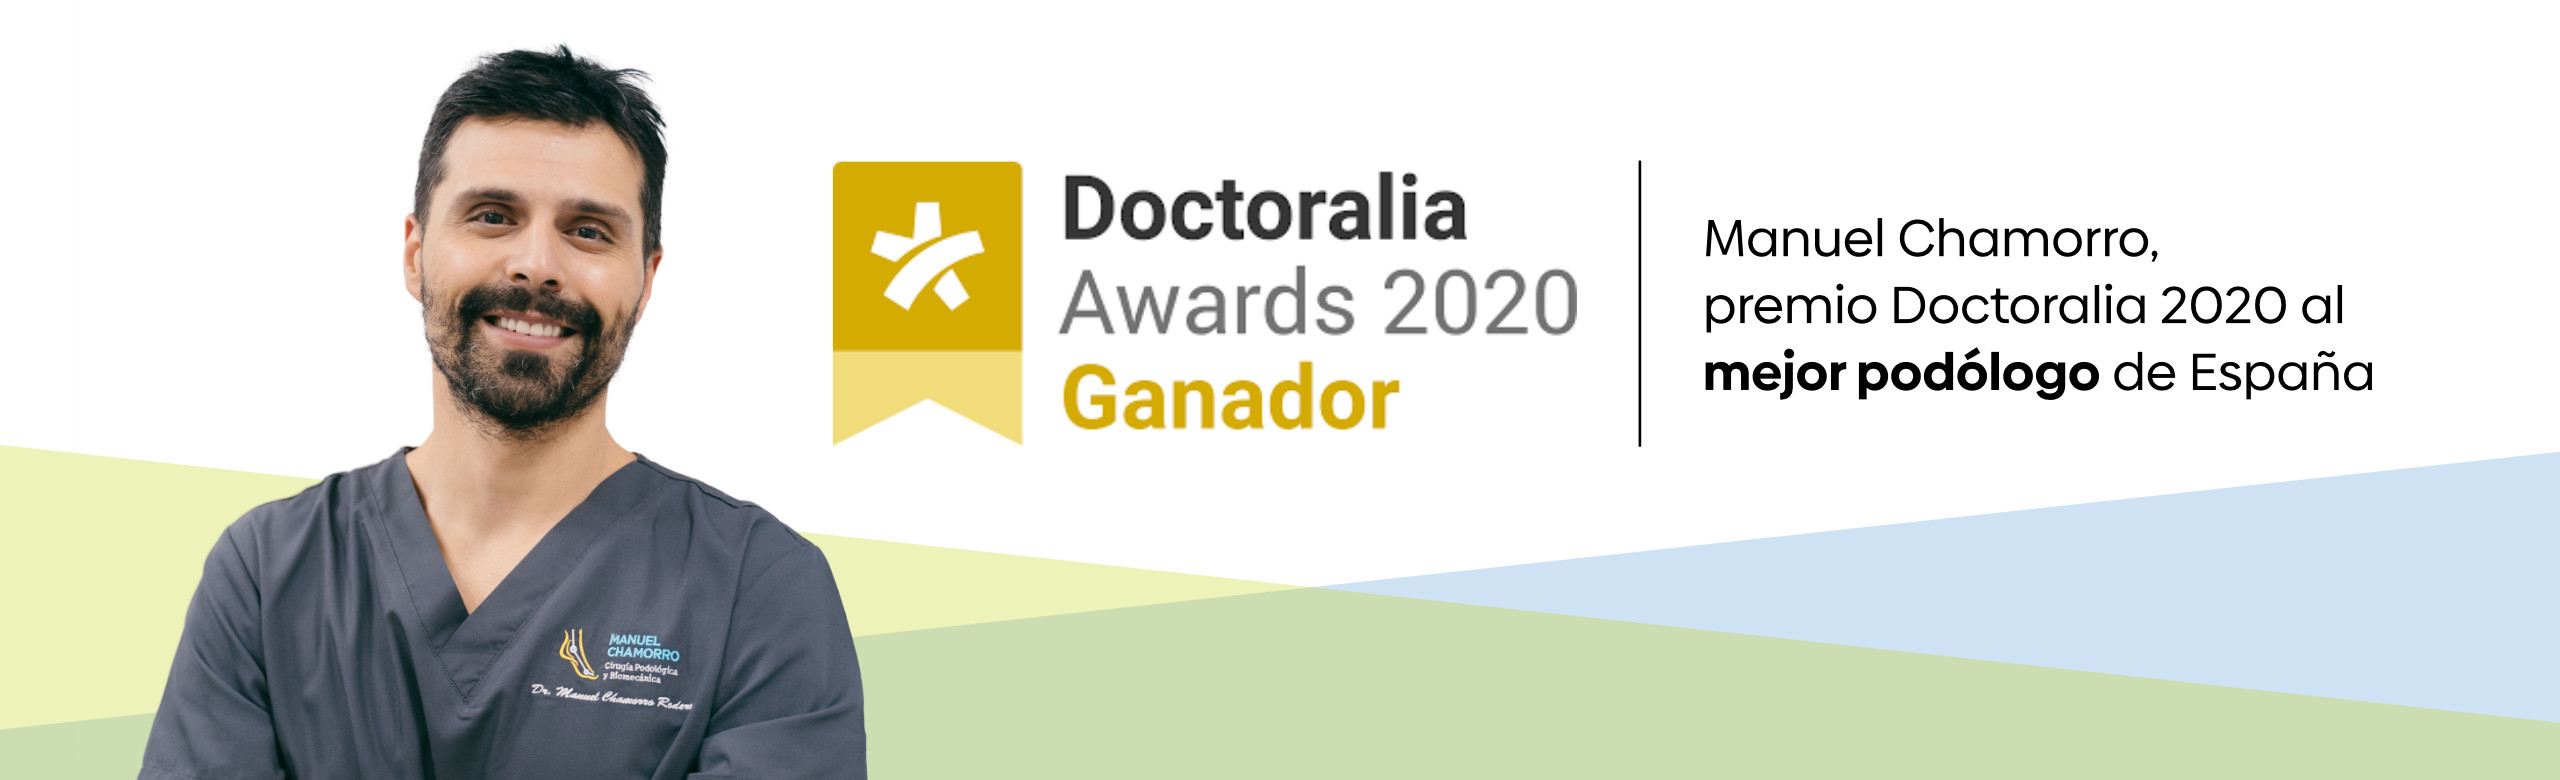 banner doctoralia 2020